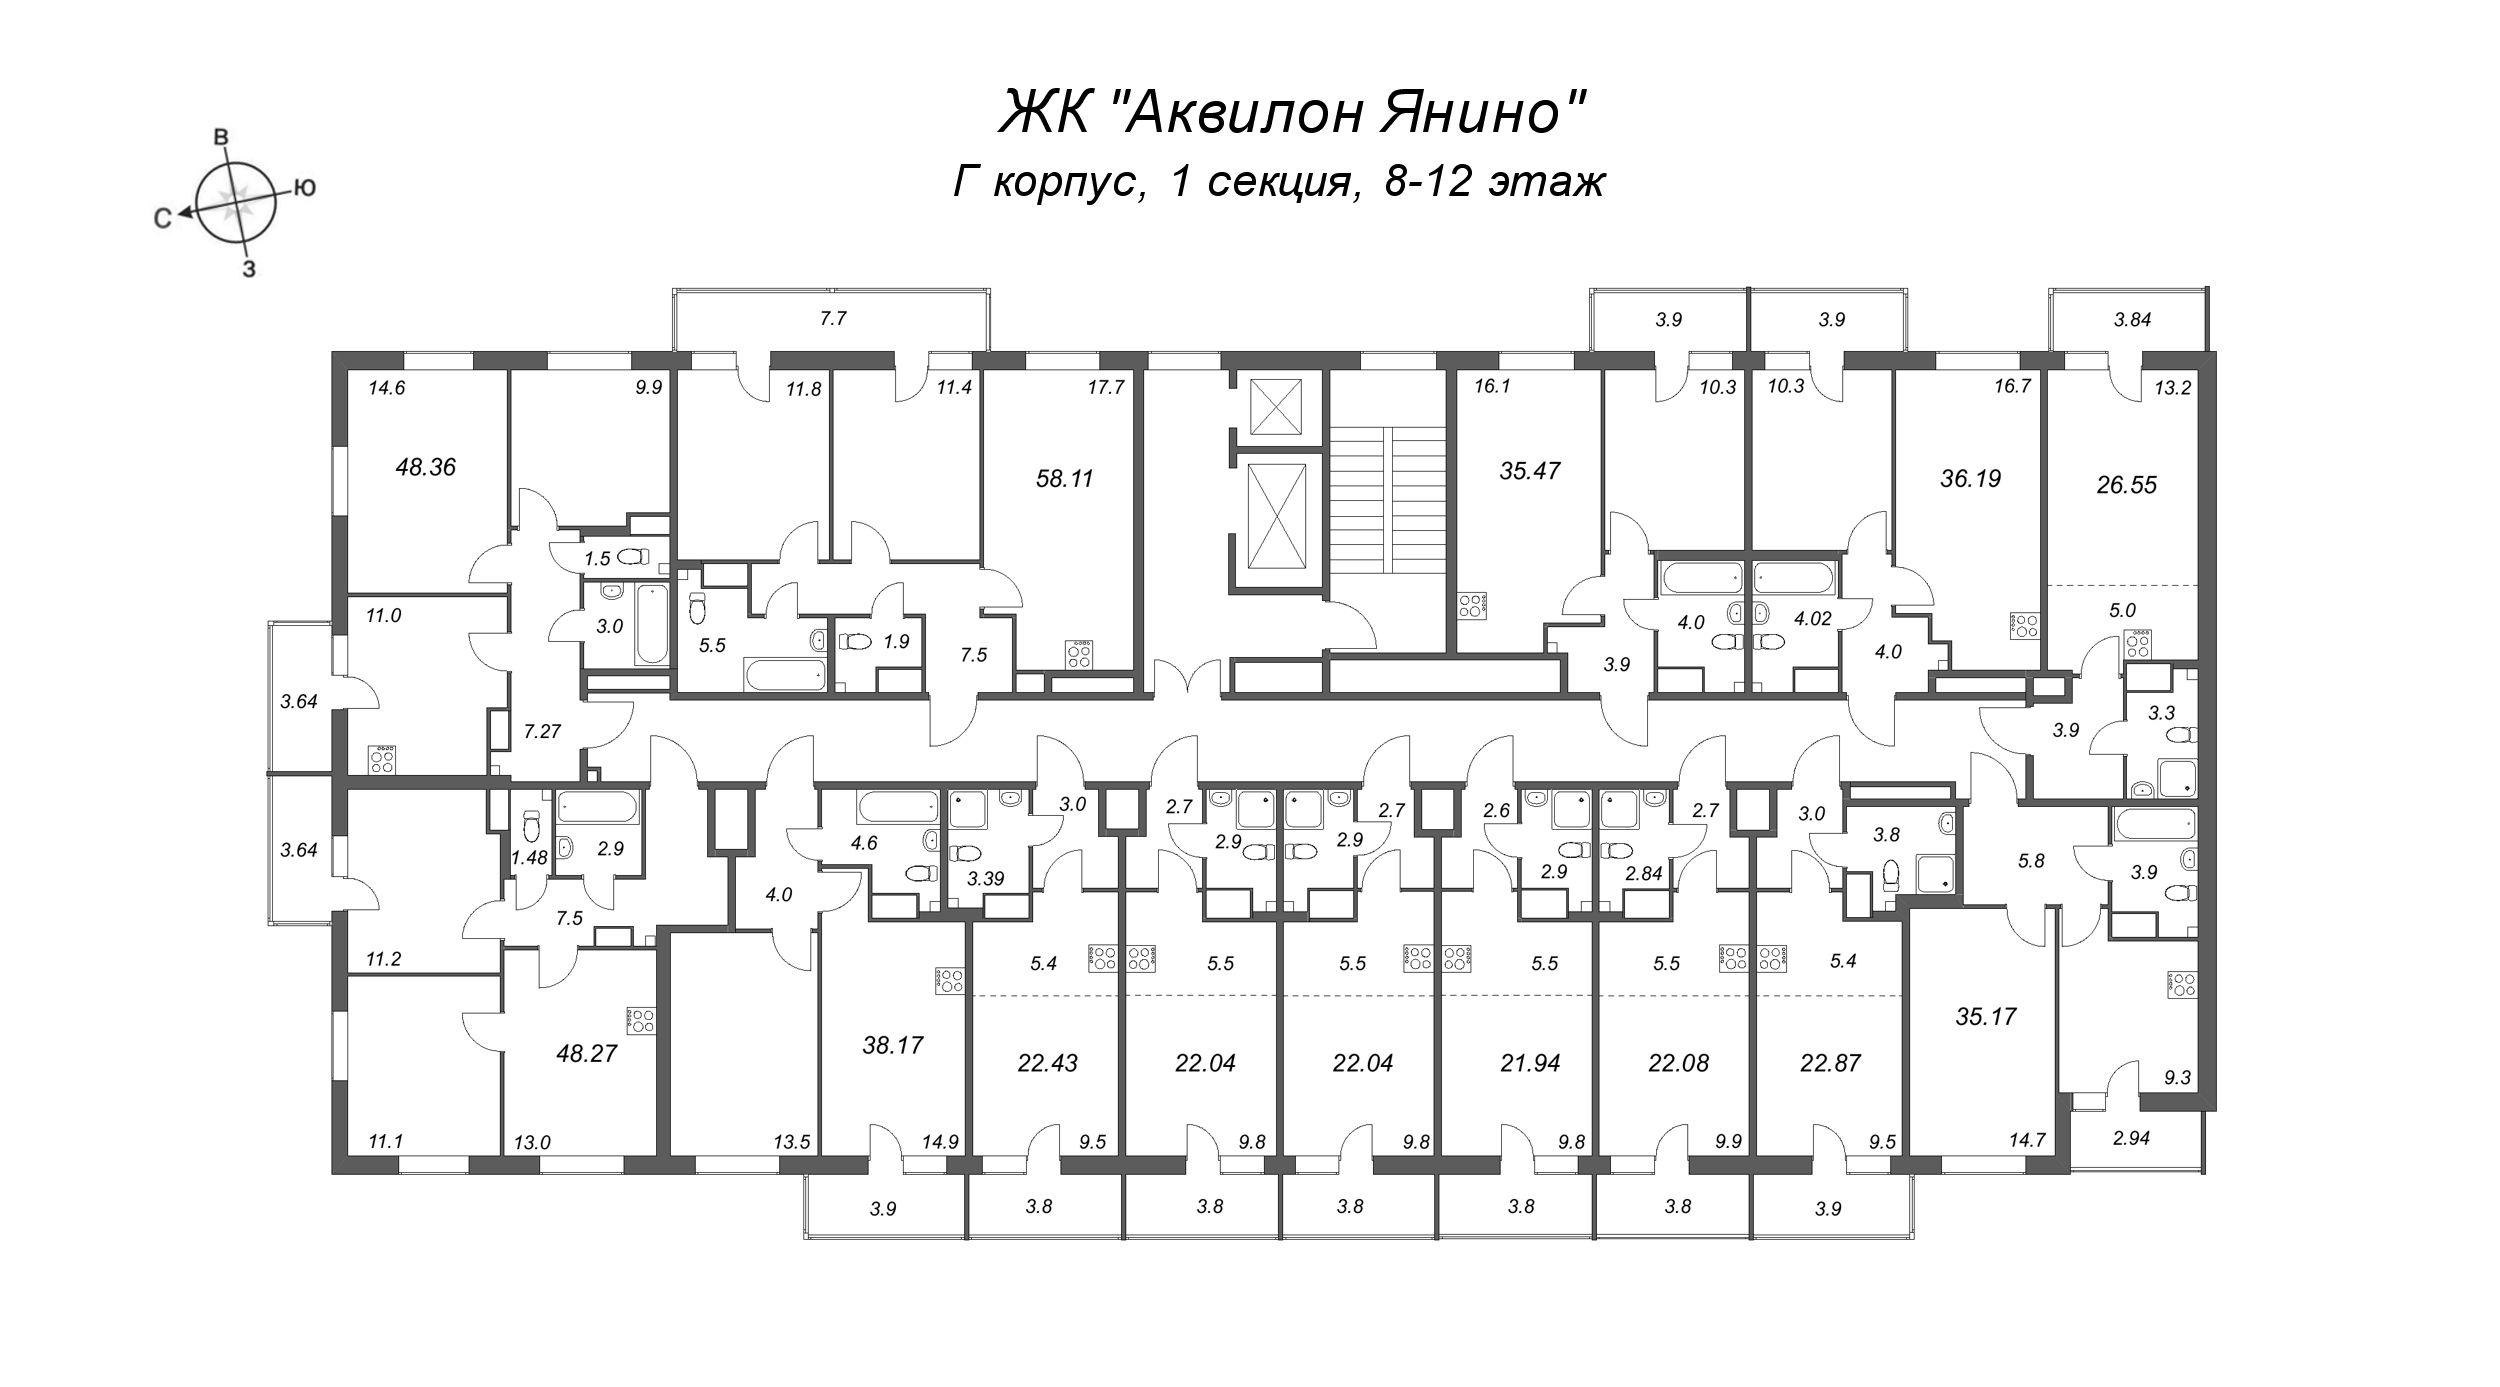 1-комнатная квартира, 35.17 м² в ЖК "Аквилон Янино" - планировка этажа